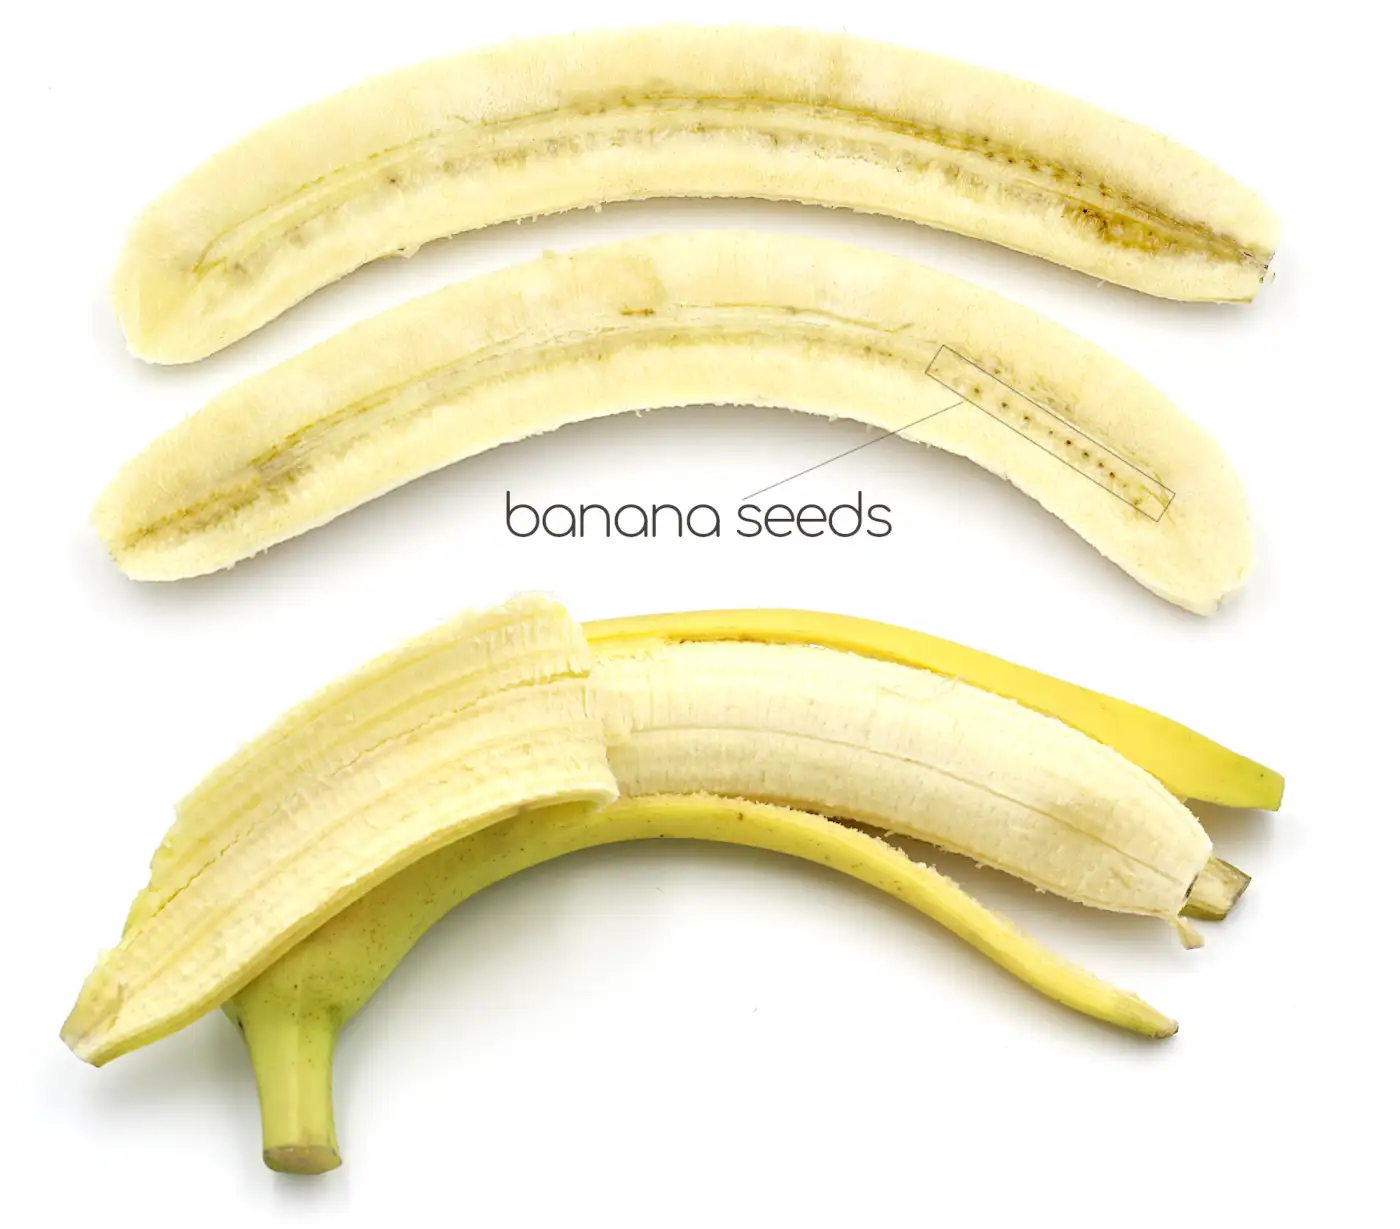 seeds seen in a sliced banana